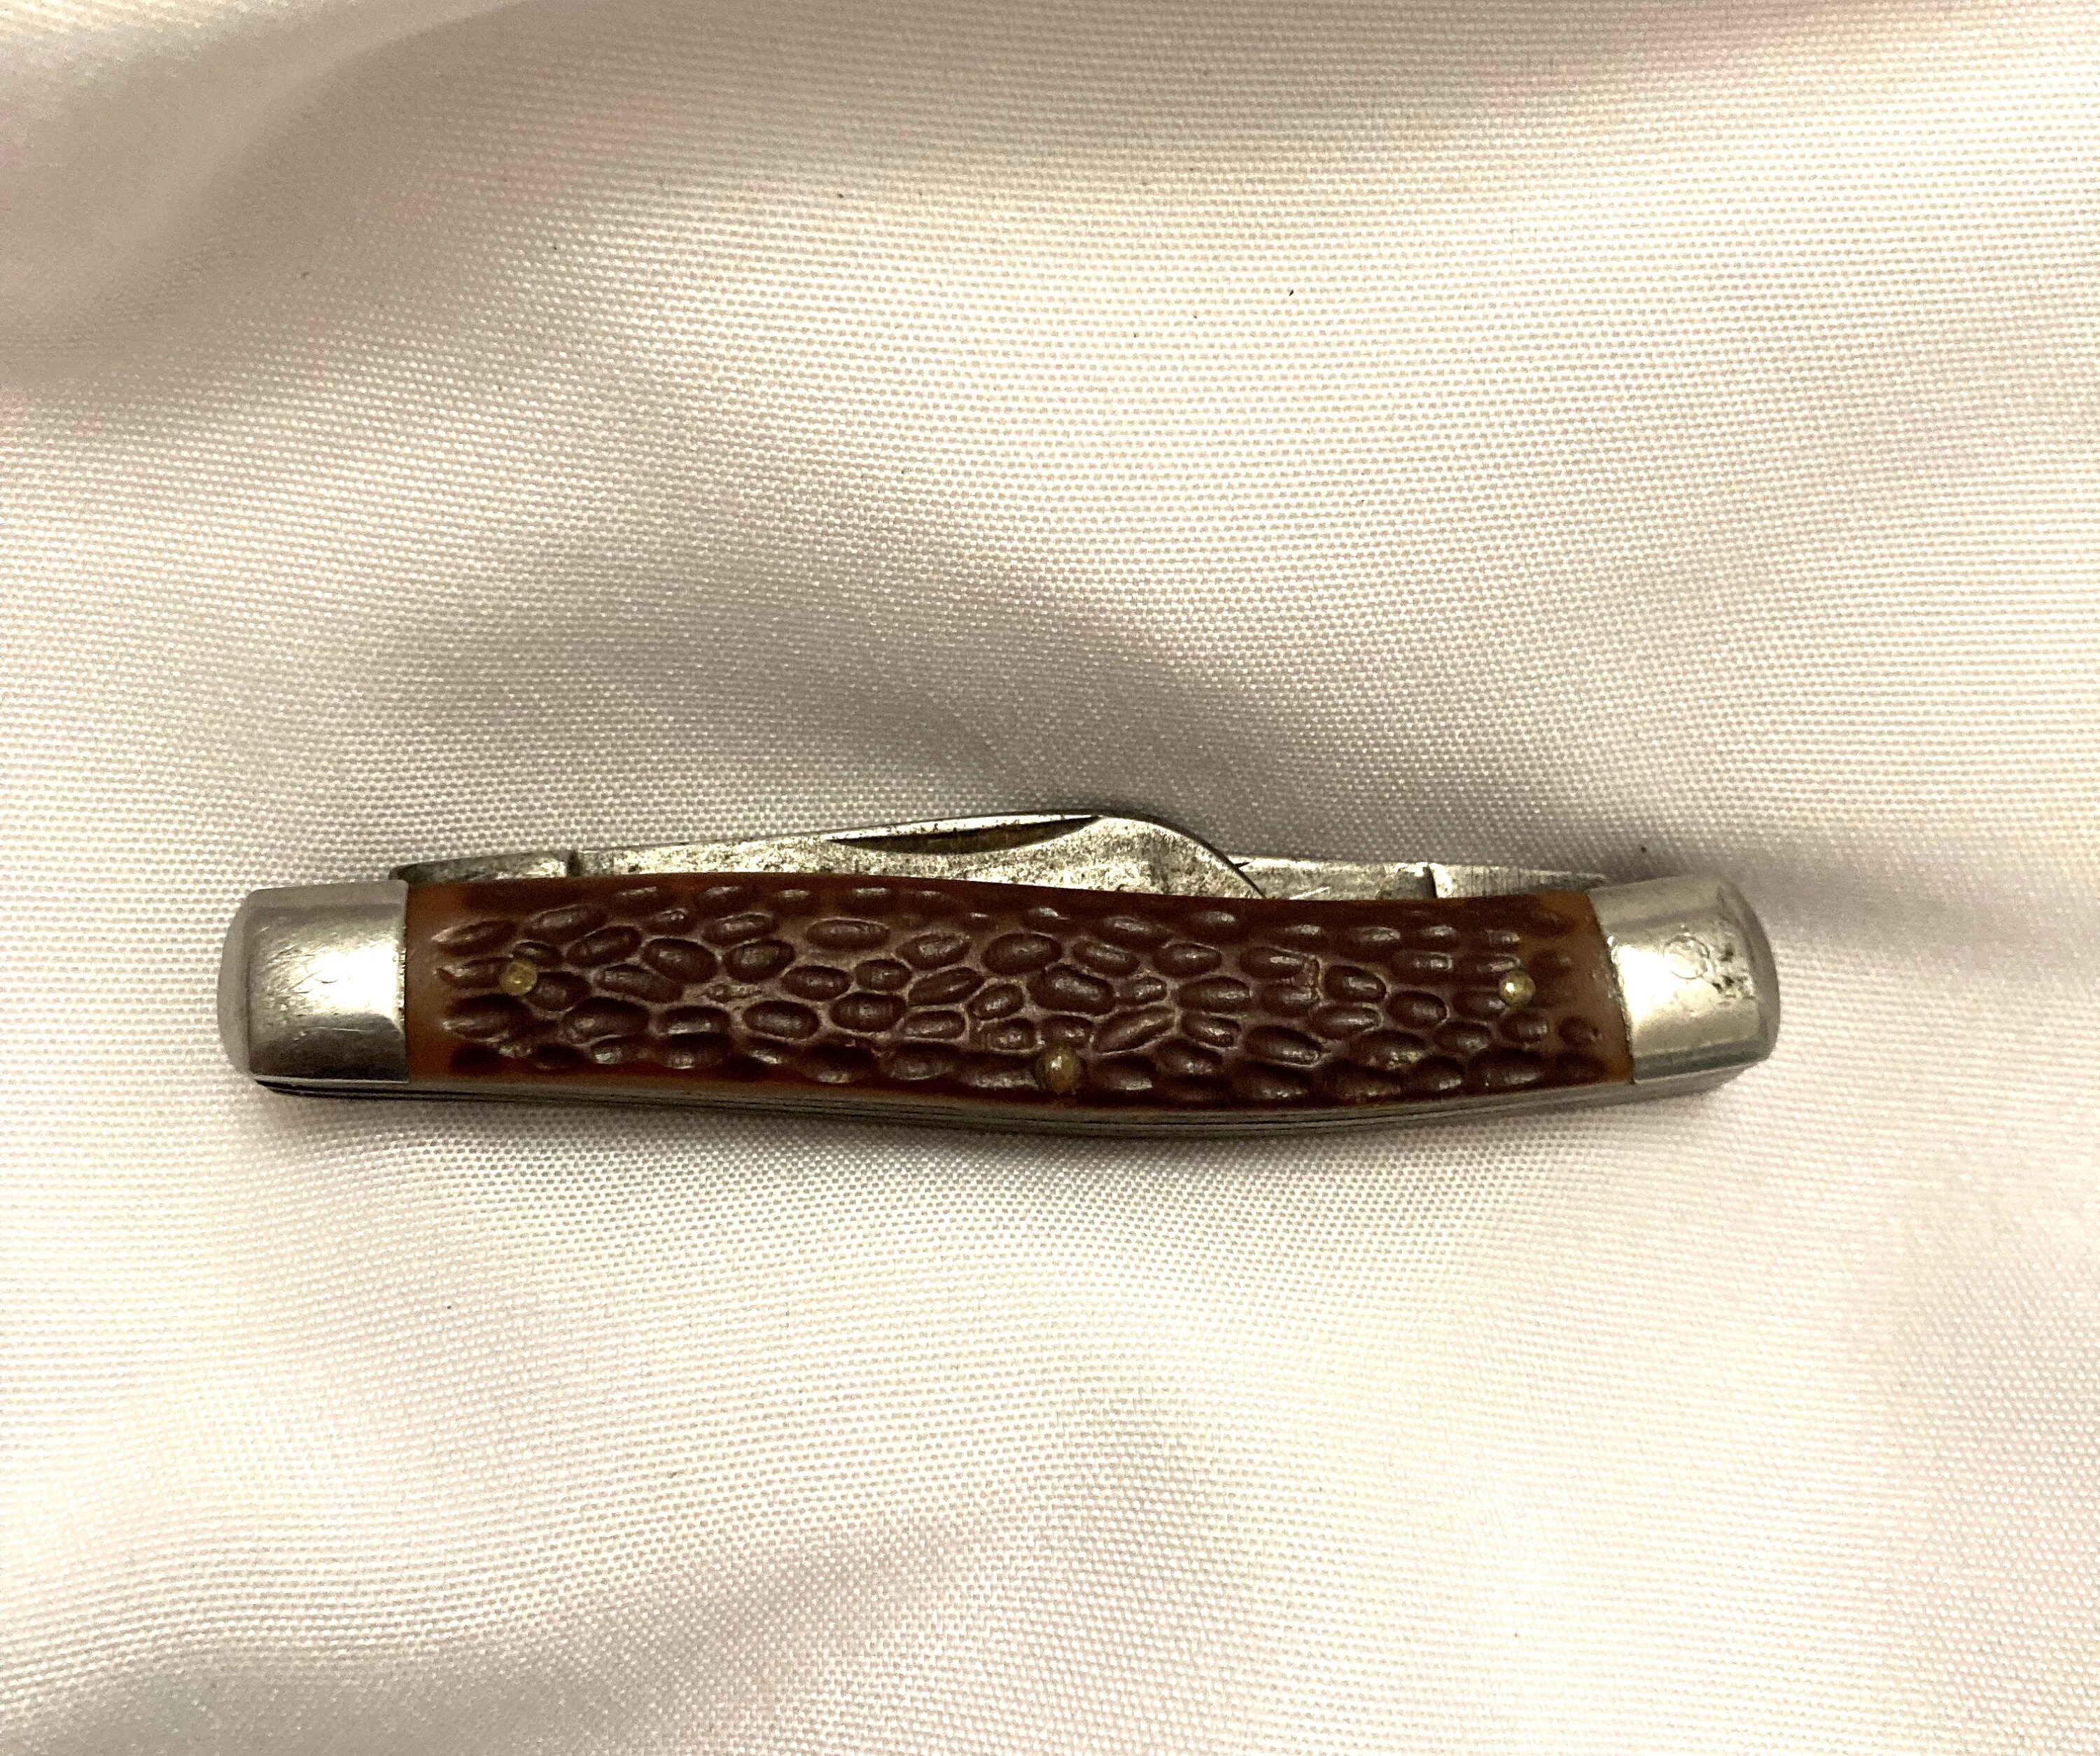 Monarch 'Gold & Iron II' Pocket Knife